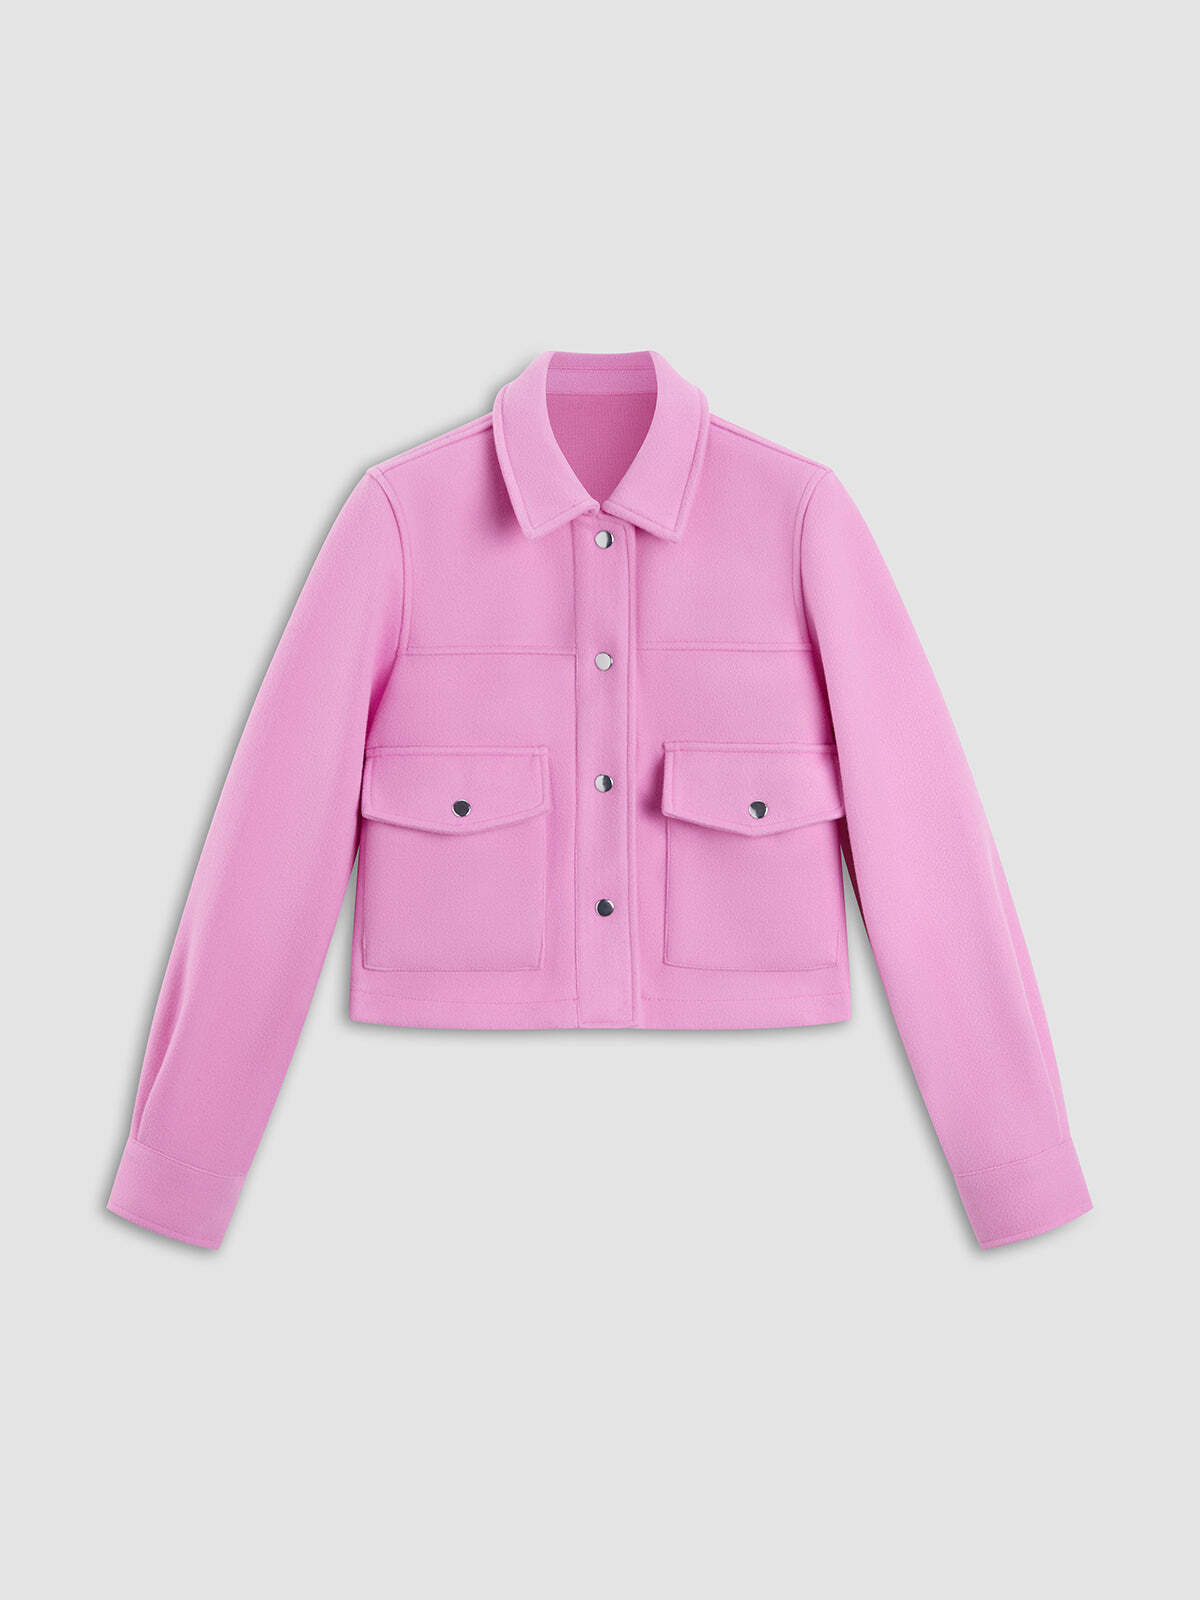 Pinky Wonderland Soft Collared Jacket - spaciova